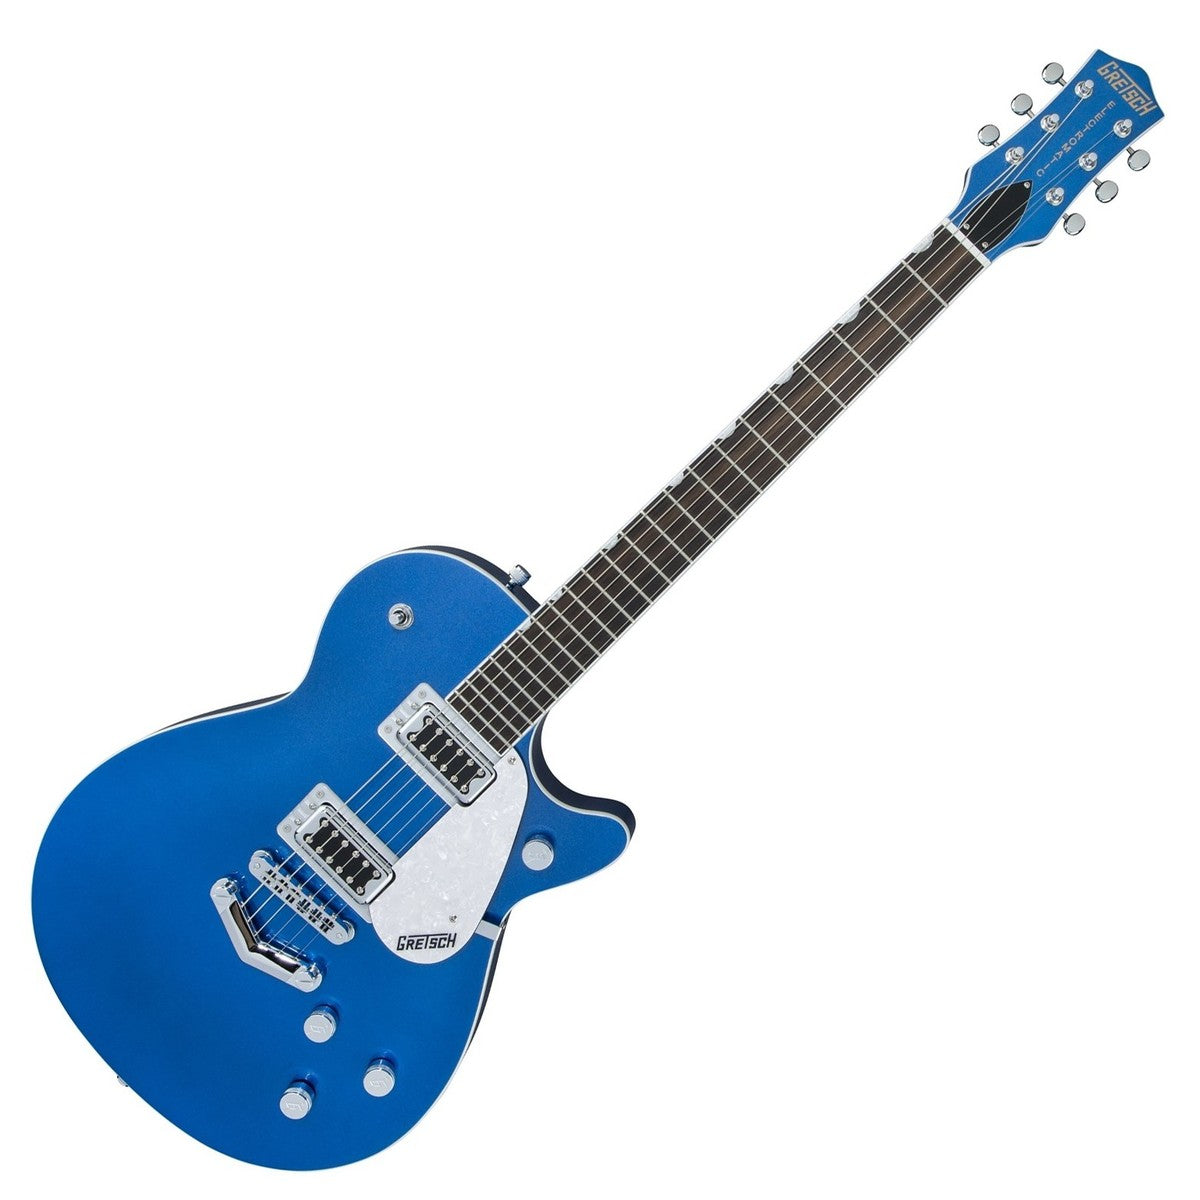 GRETSCH G5435 LIM.ED Guitare Electrique FAIRLANE BLUE